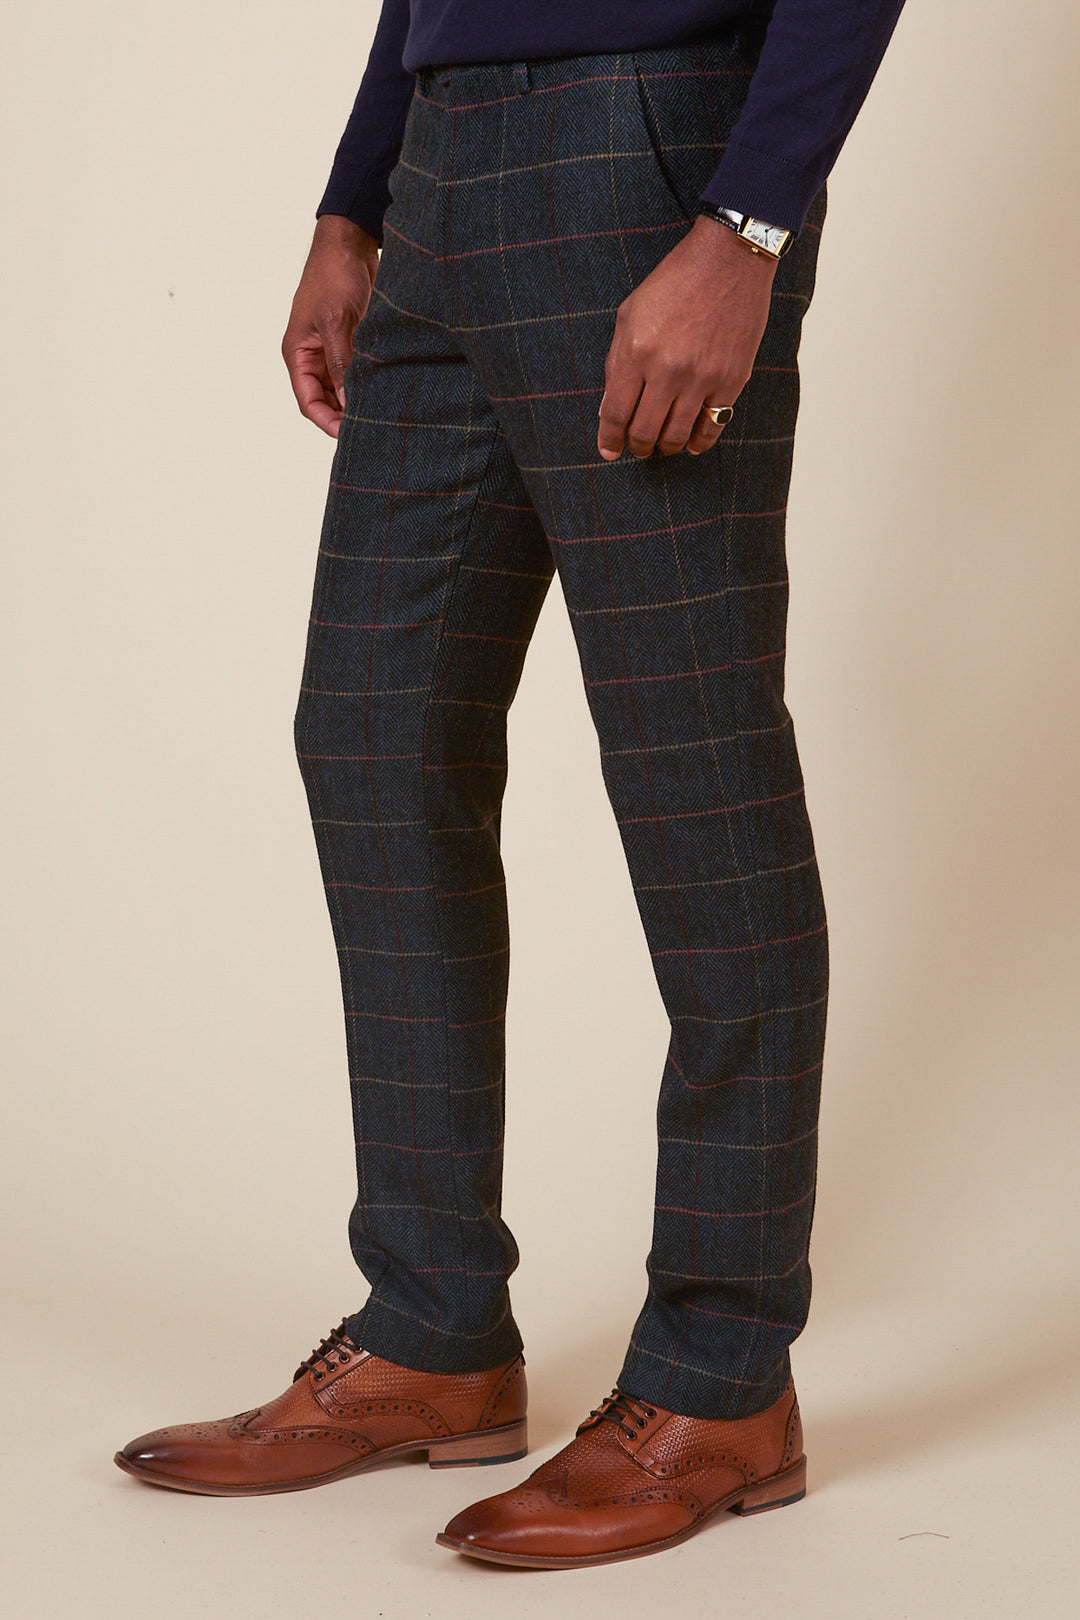 ETON - Navy Blue Tweed Check Three Piece Suit